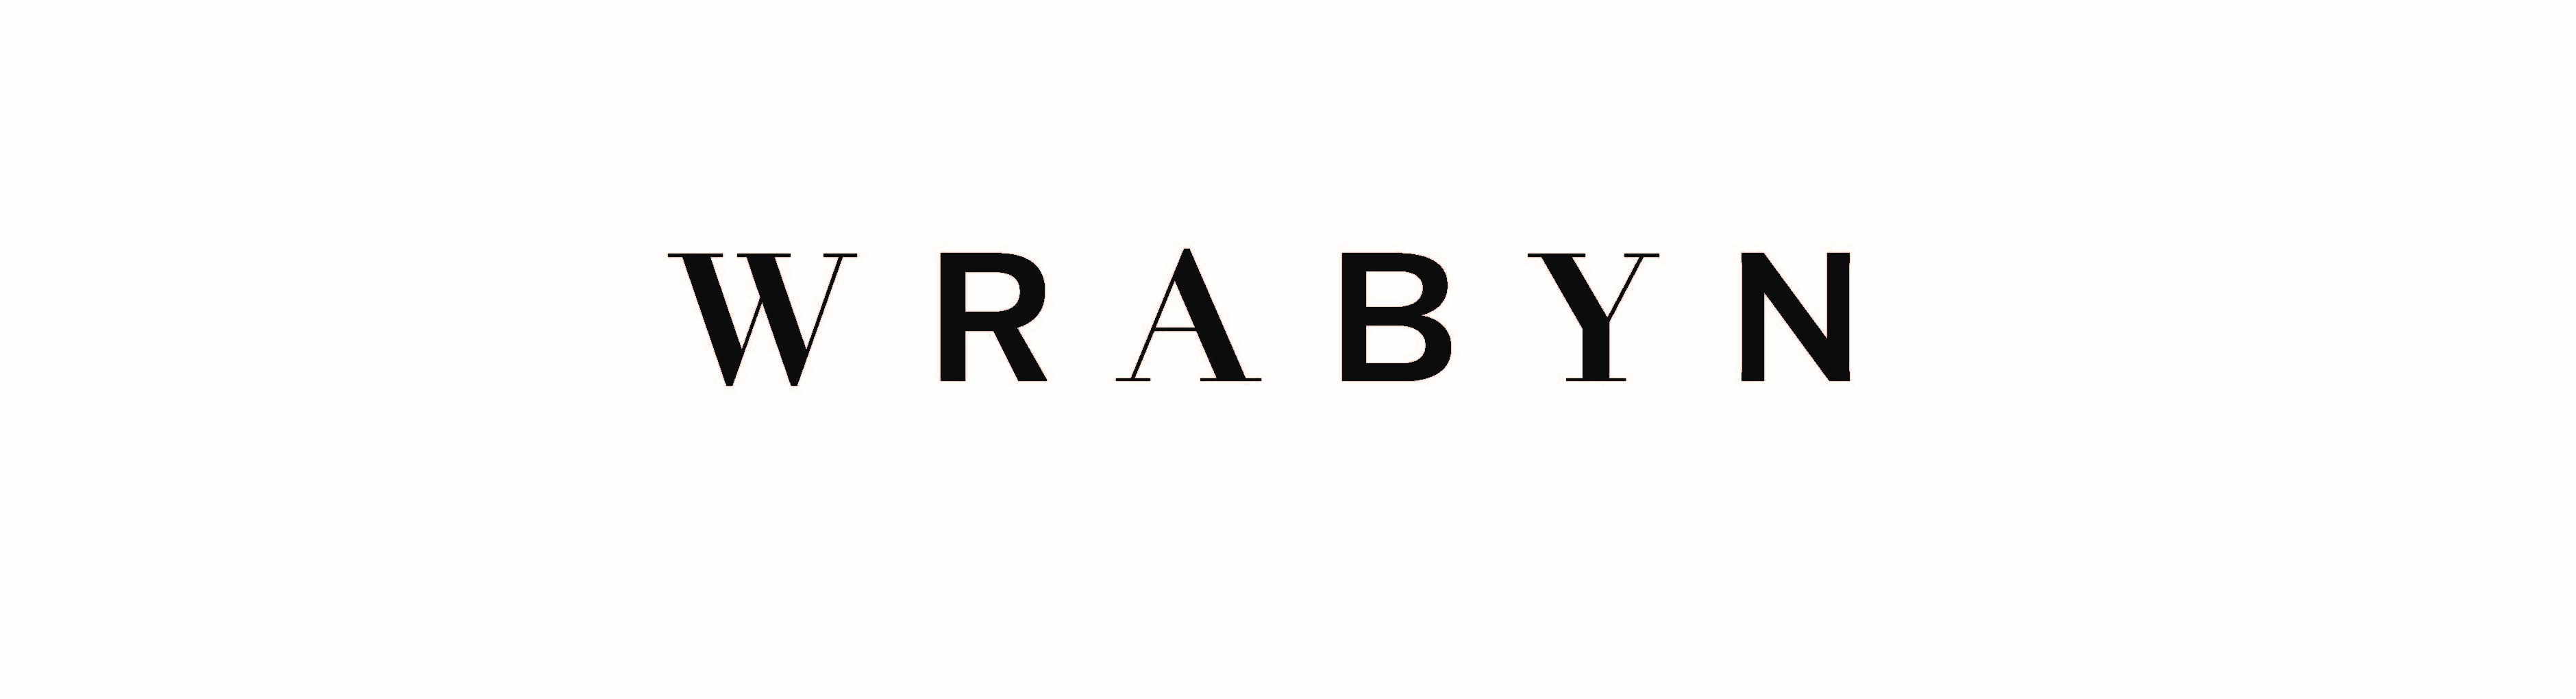 Wrabyn Boutique logo